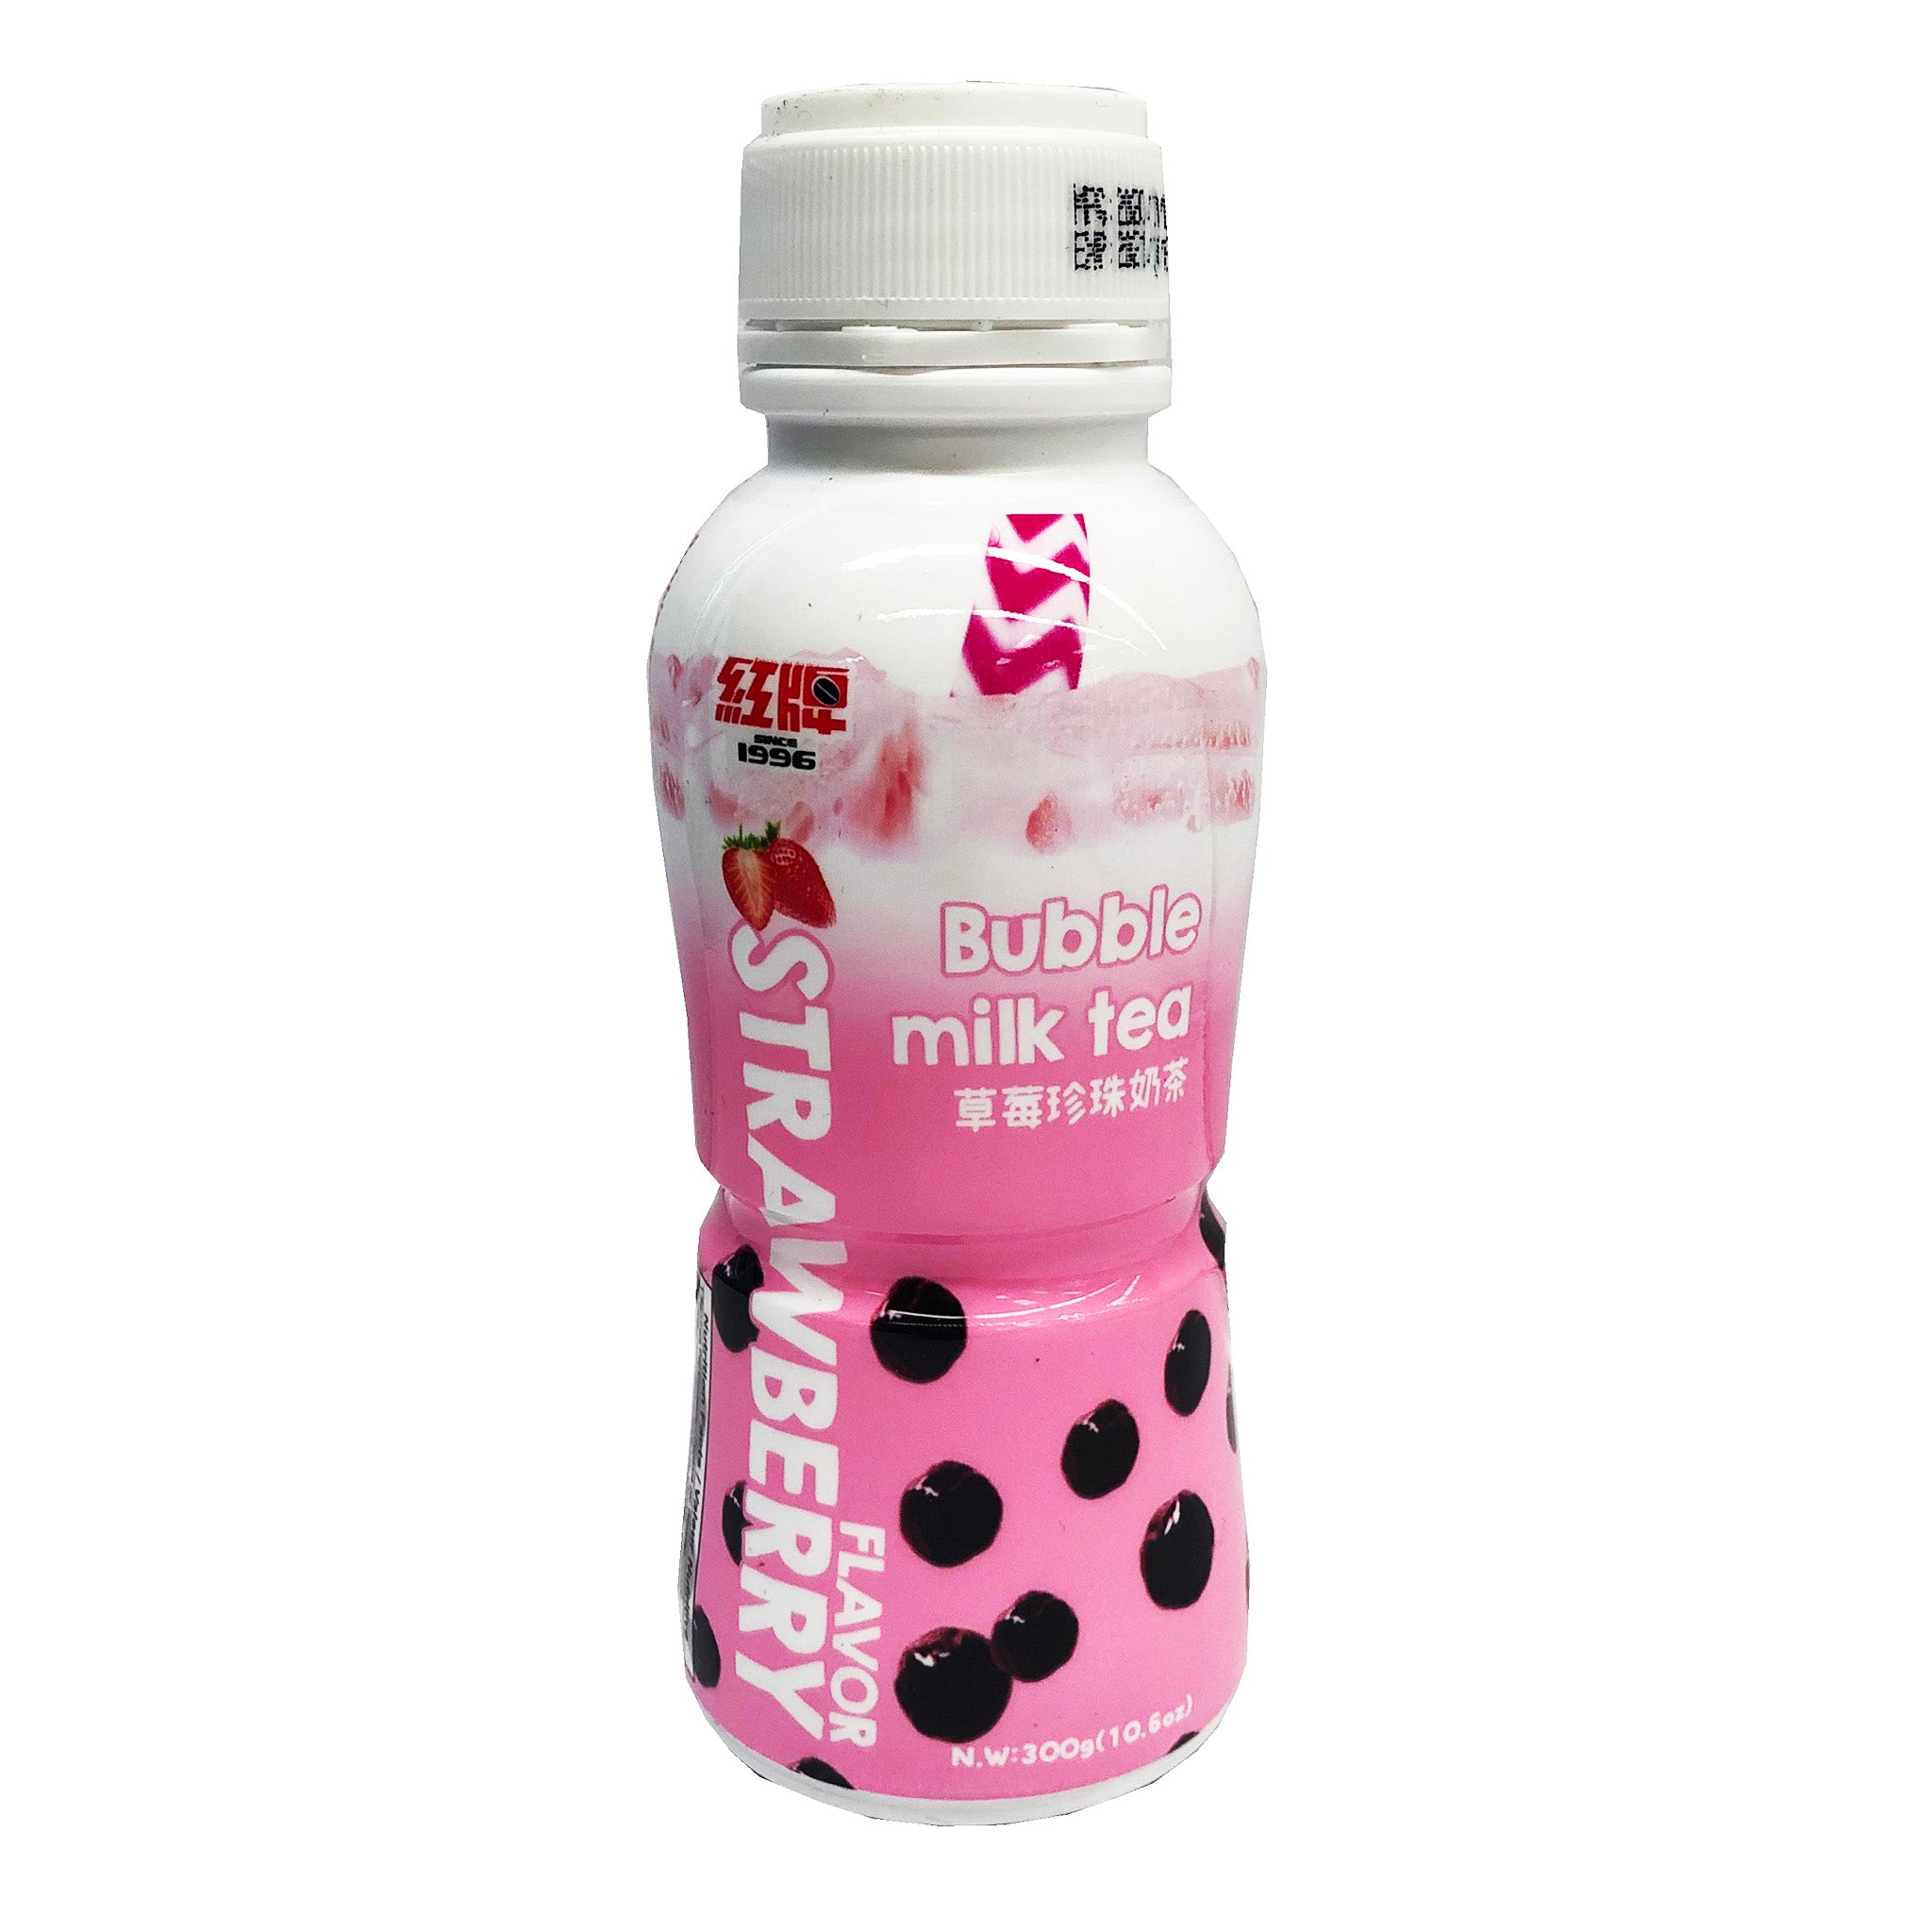 Rico Bubble Milk Tea In Bottle Strawberry 106oz Just Asian Food 0391